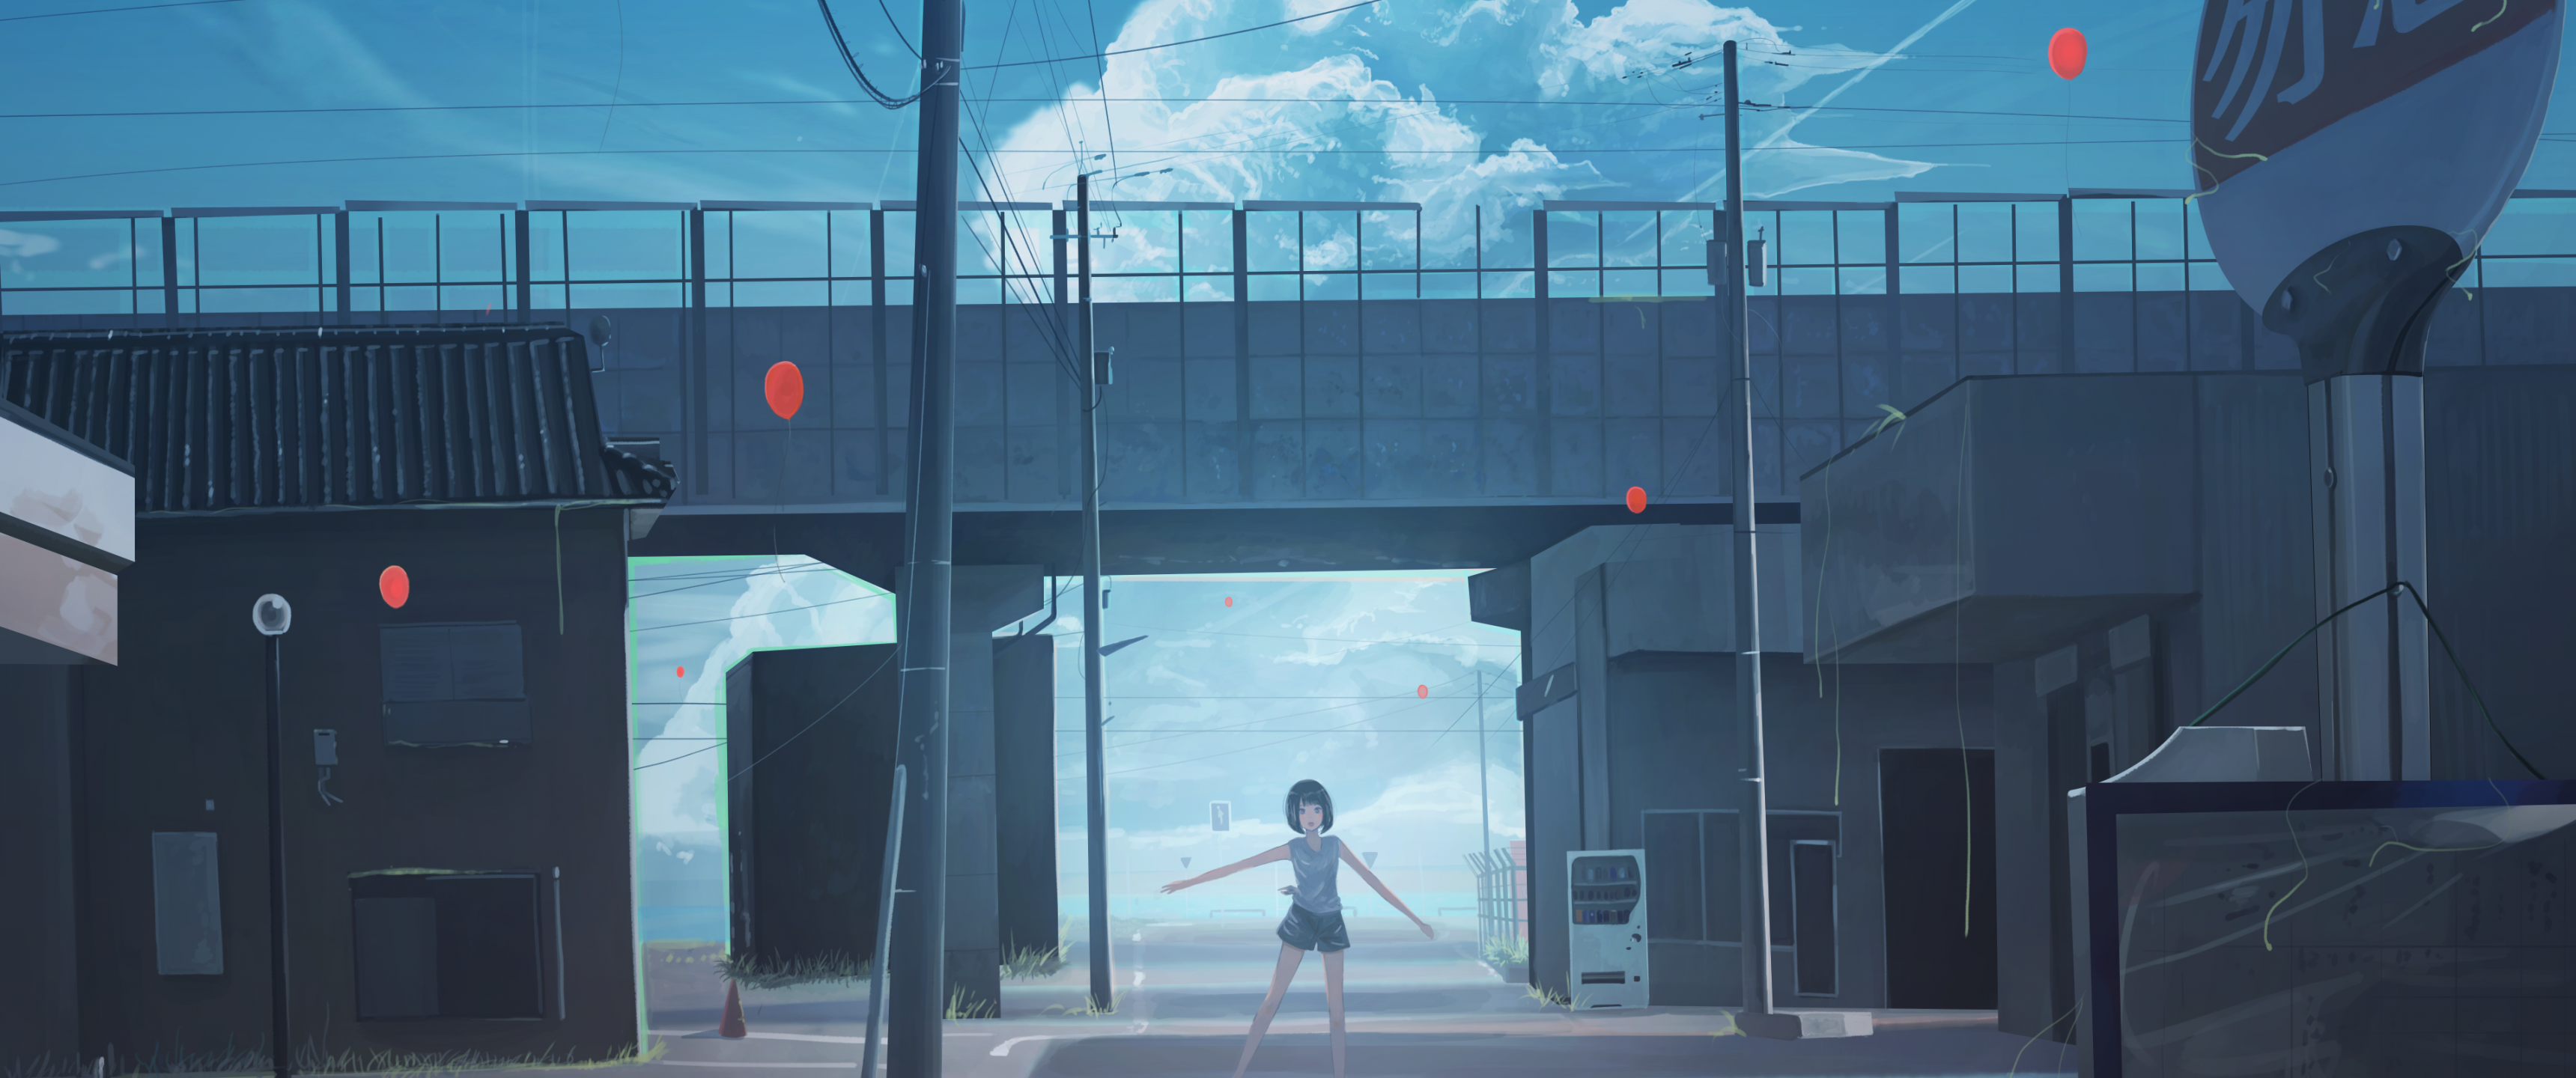 Download 3440x1440 Anime Girl, Summer, Bridge, Streets, Clouds, Scenic Wallpaper